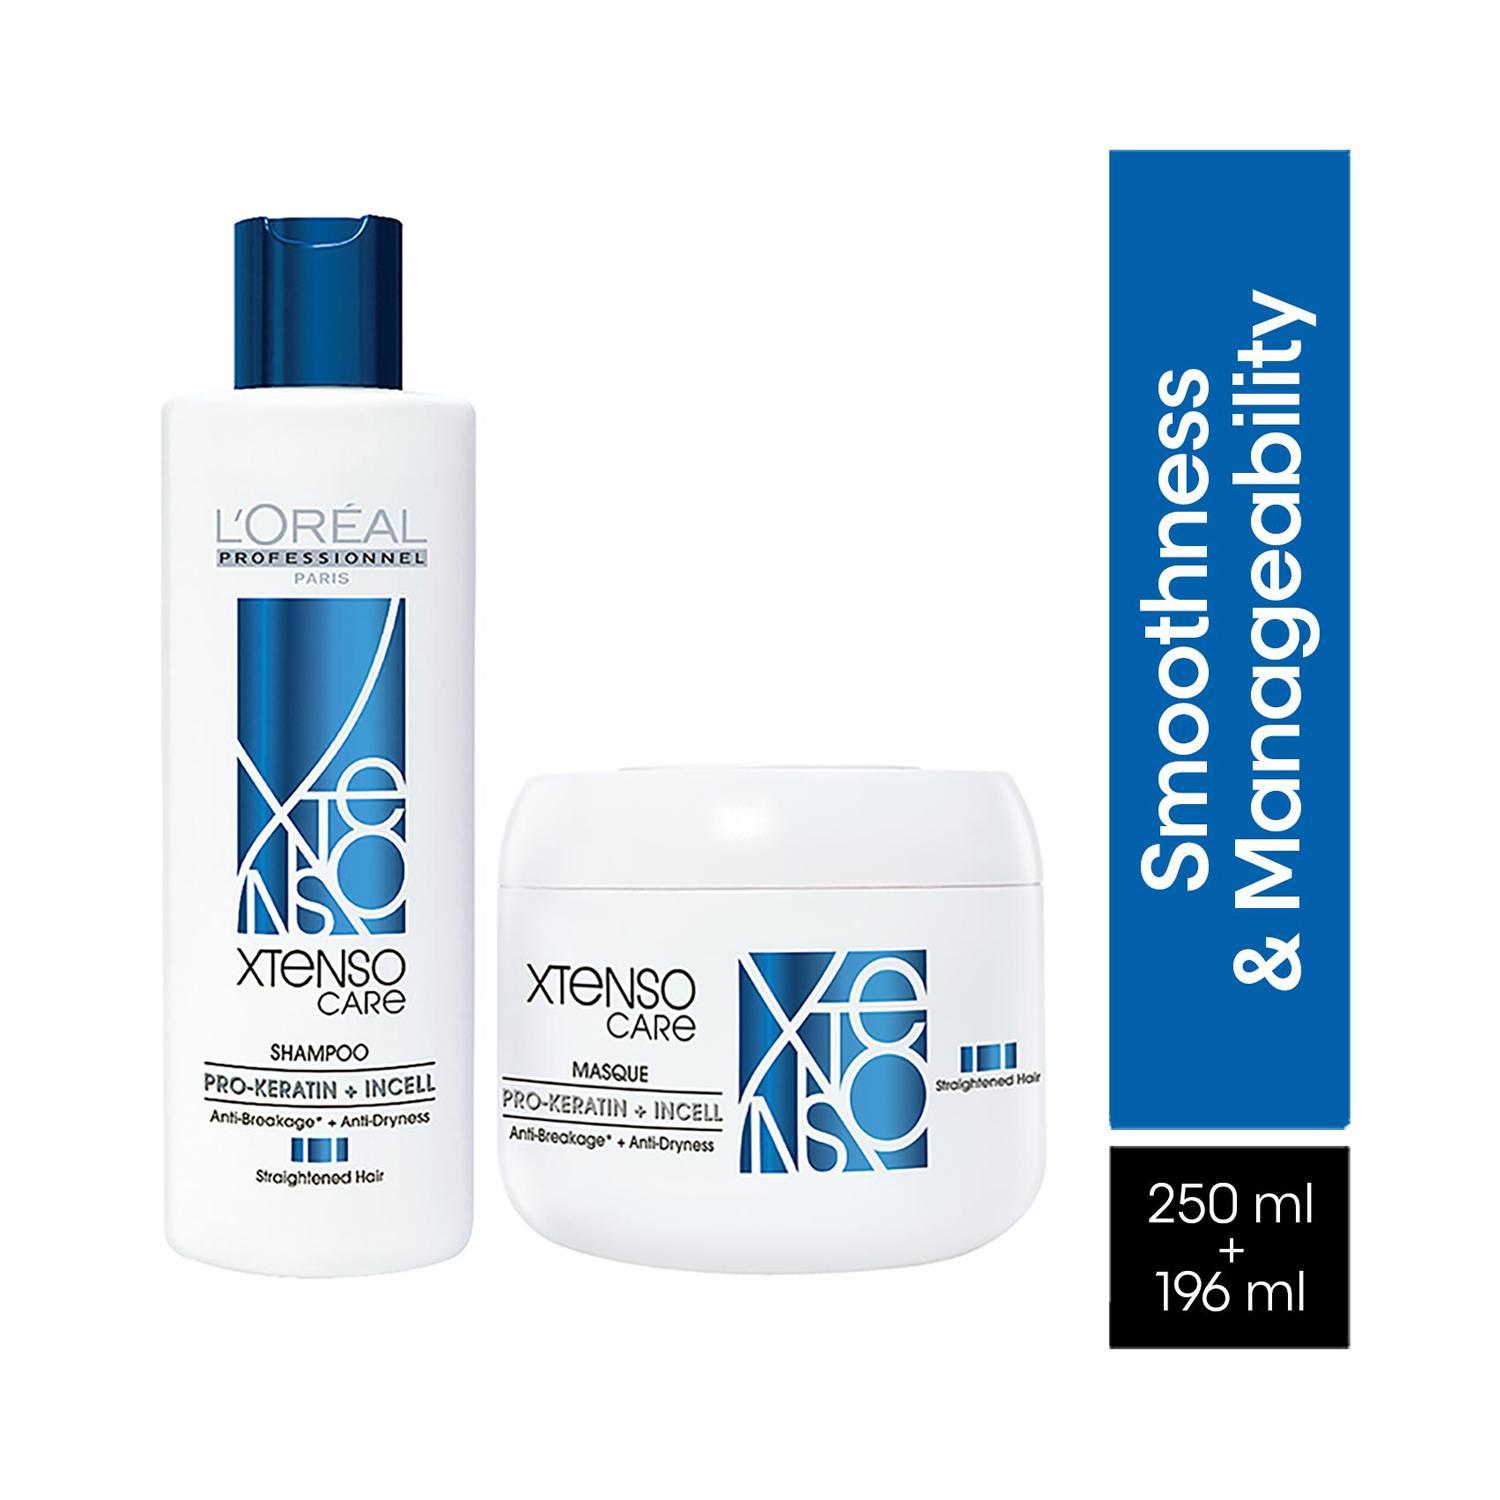 l'oreal professionnel x-tenso care pro-keratine + incell shampoo 250ml, mask 196gms & serum 50ml